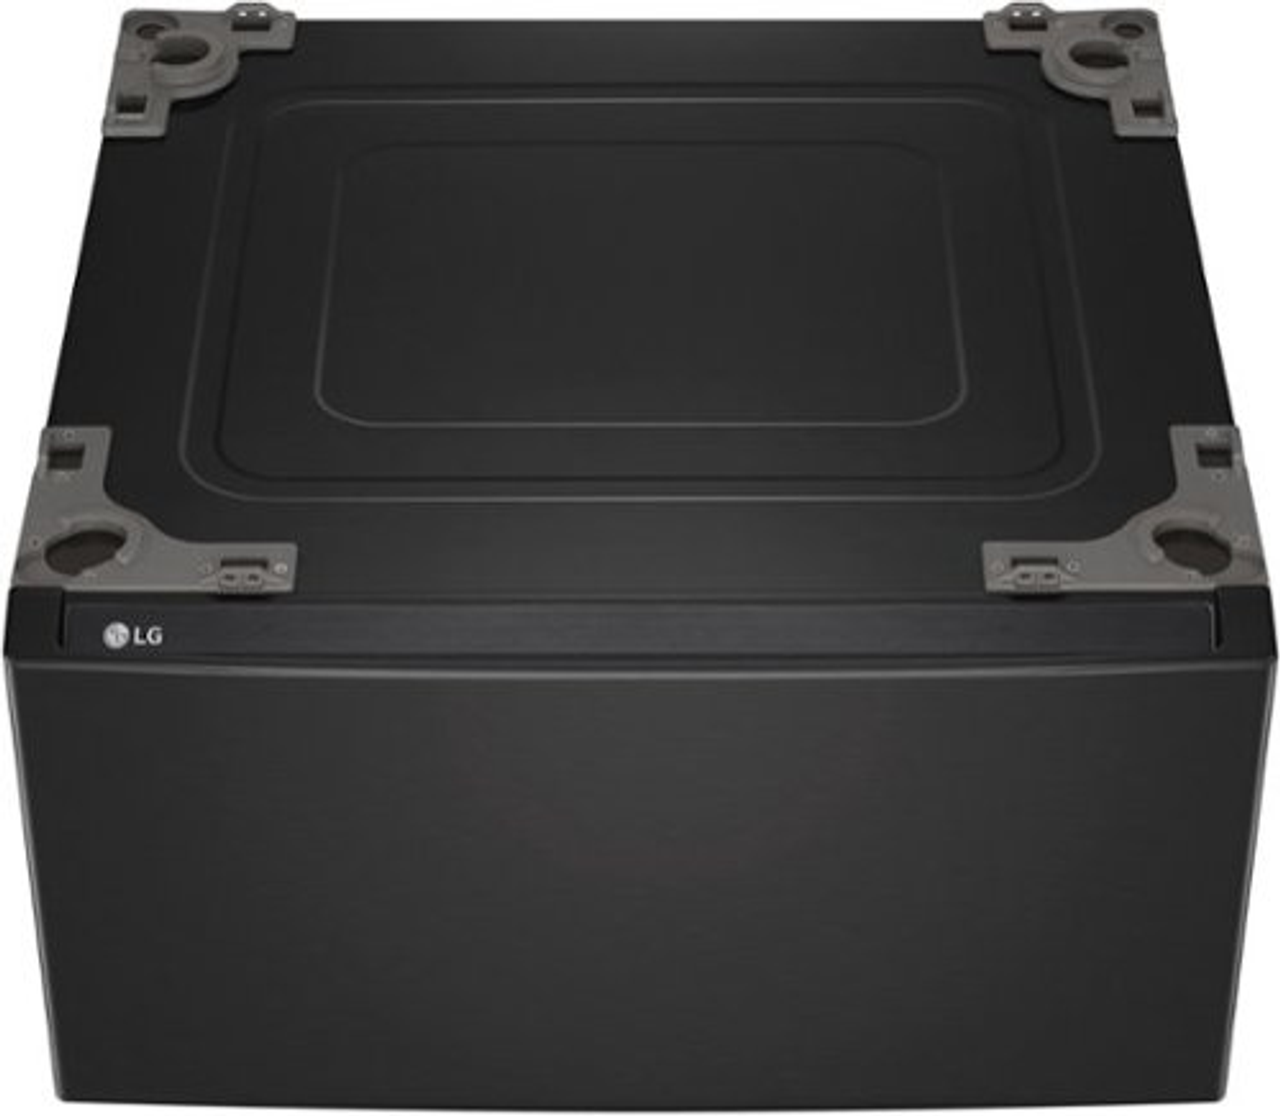 LG - 27" Laundry Pedestal with Storage Drawer - Black steel